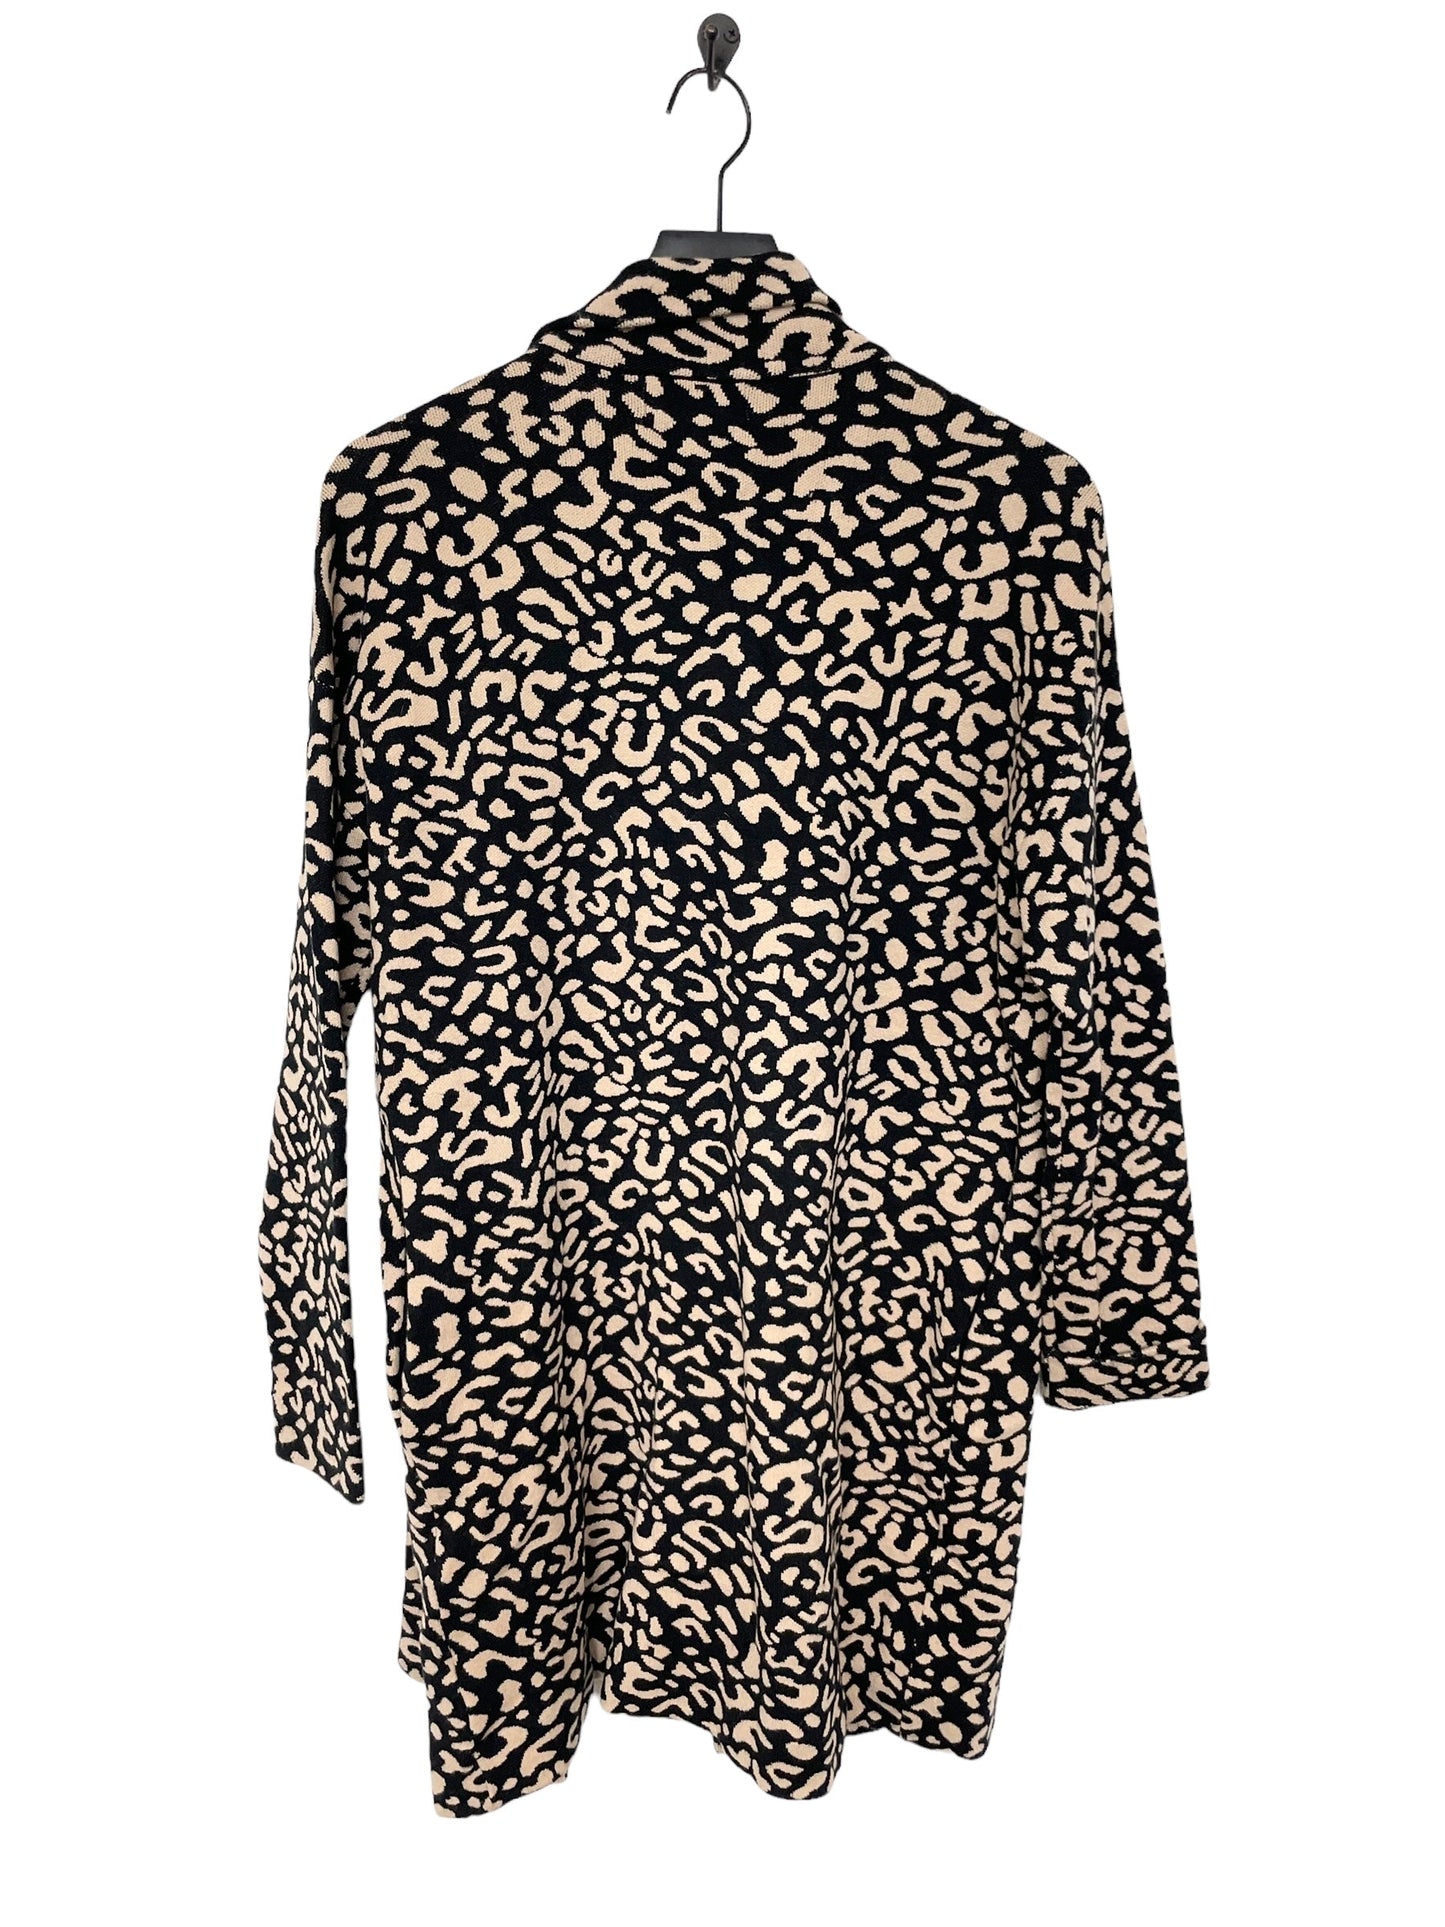 Leopard Print Sweater Cardigan Premise, Size M